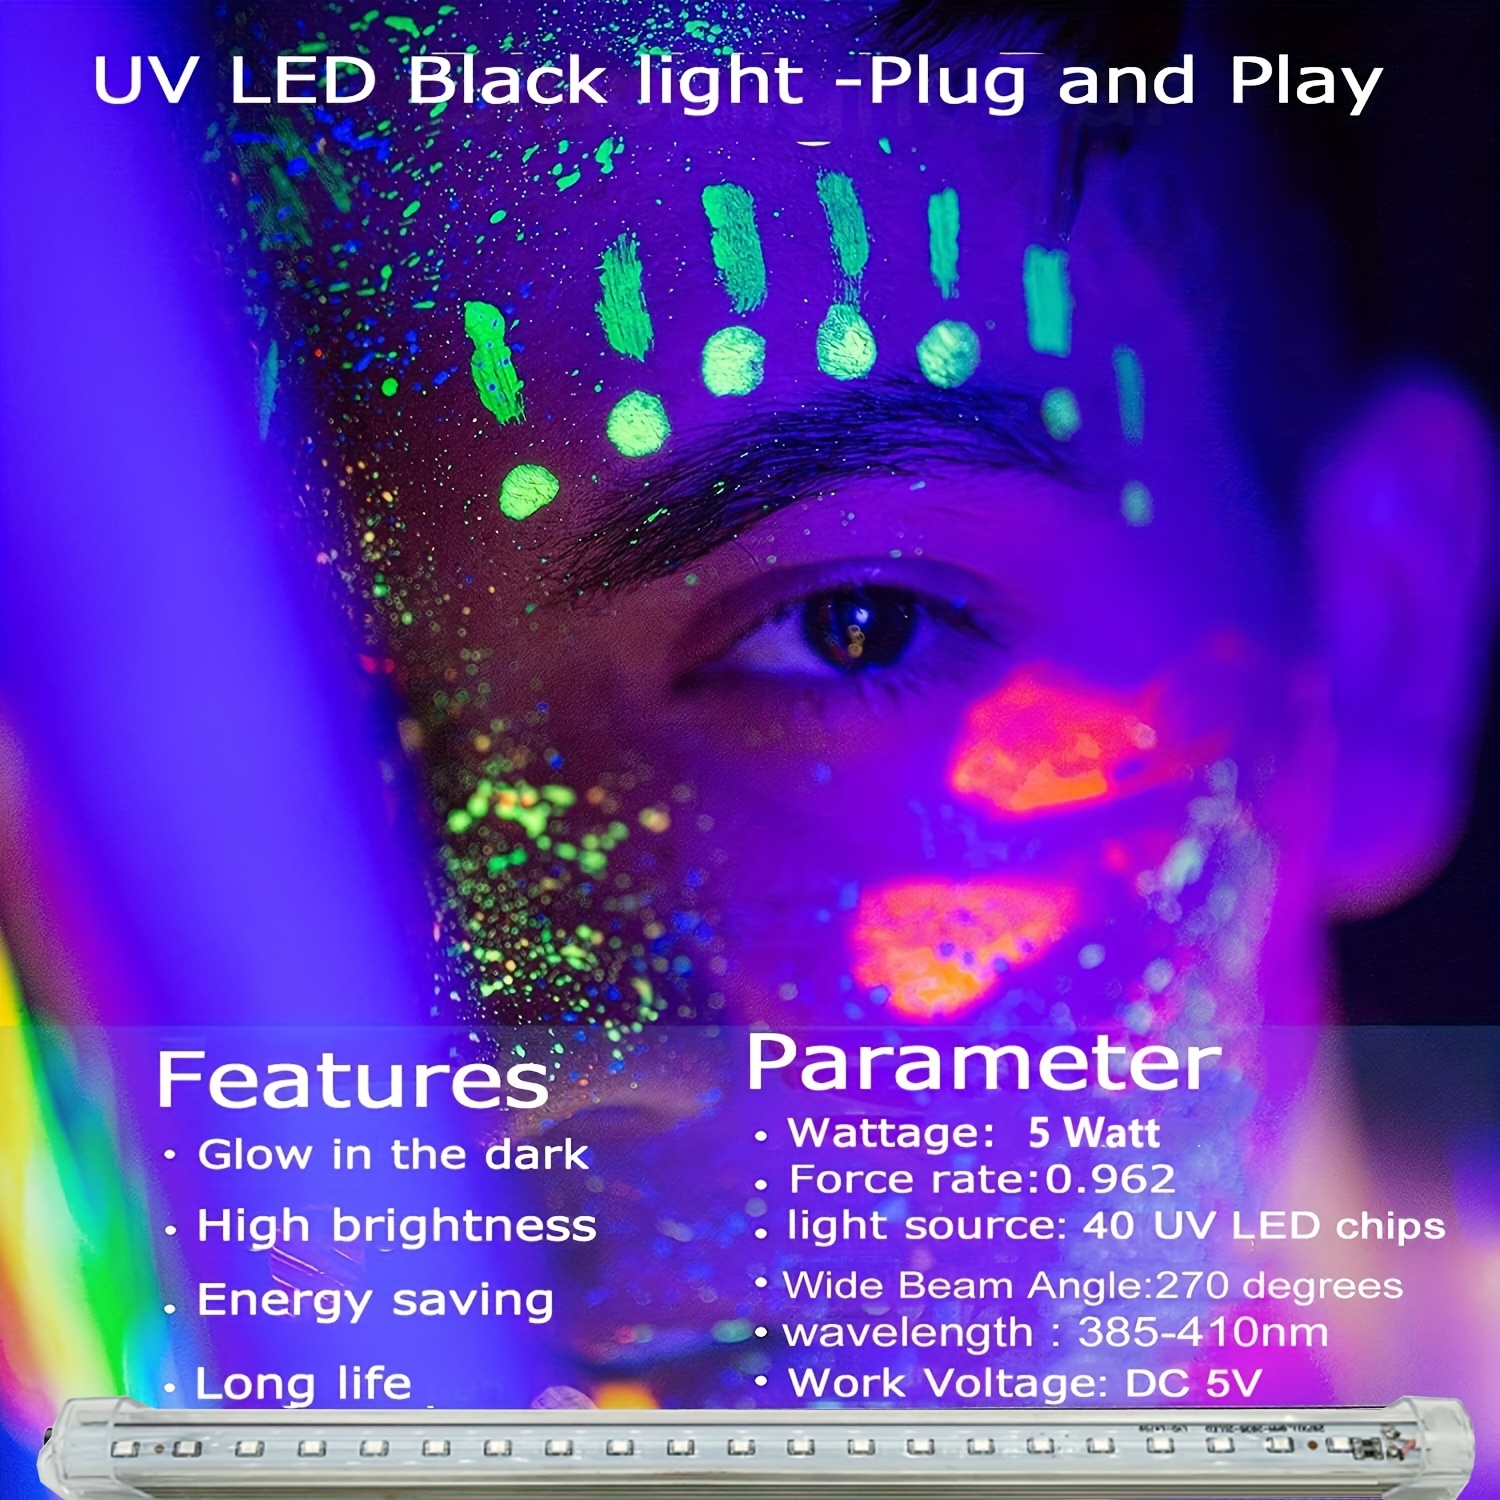 2 Pack 100W LED Black Lights for Glow Party UV Flood Light Blacklight  Fixtures